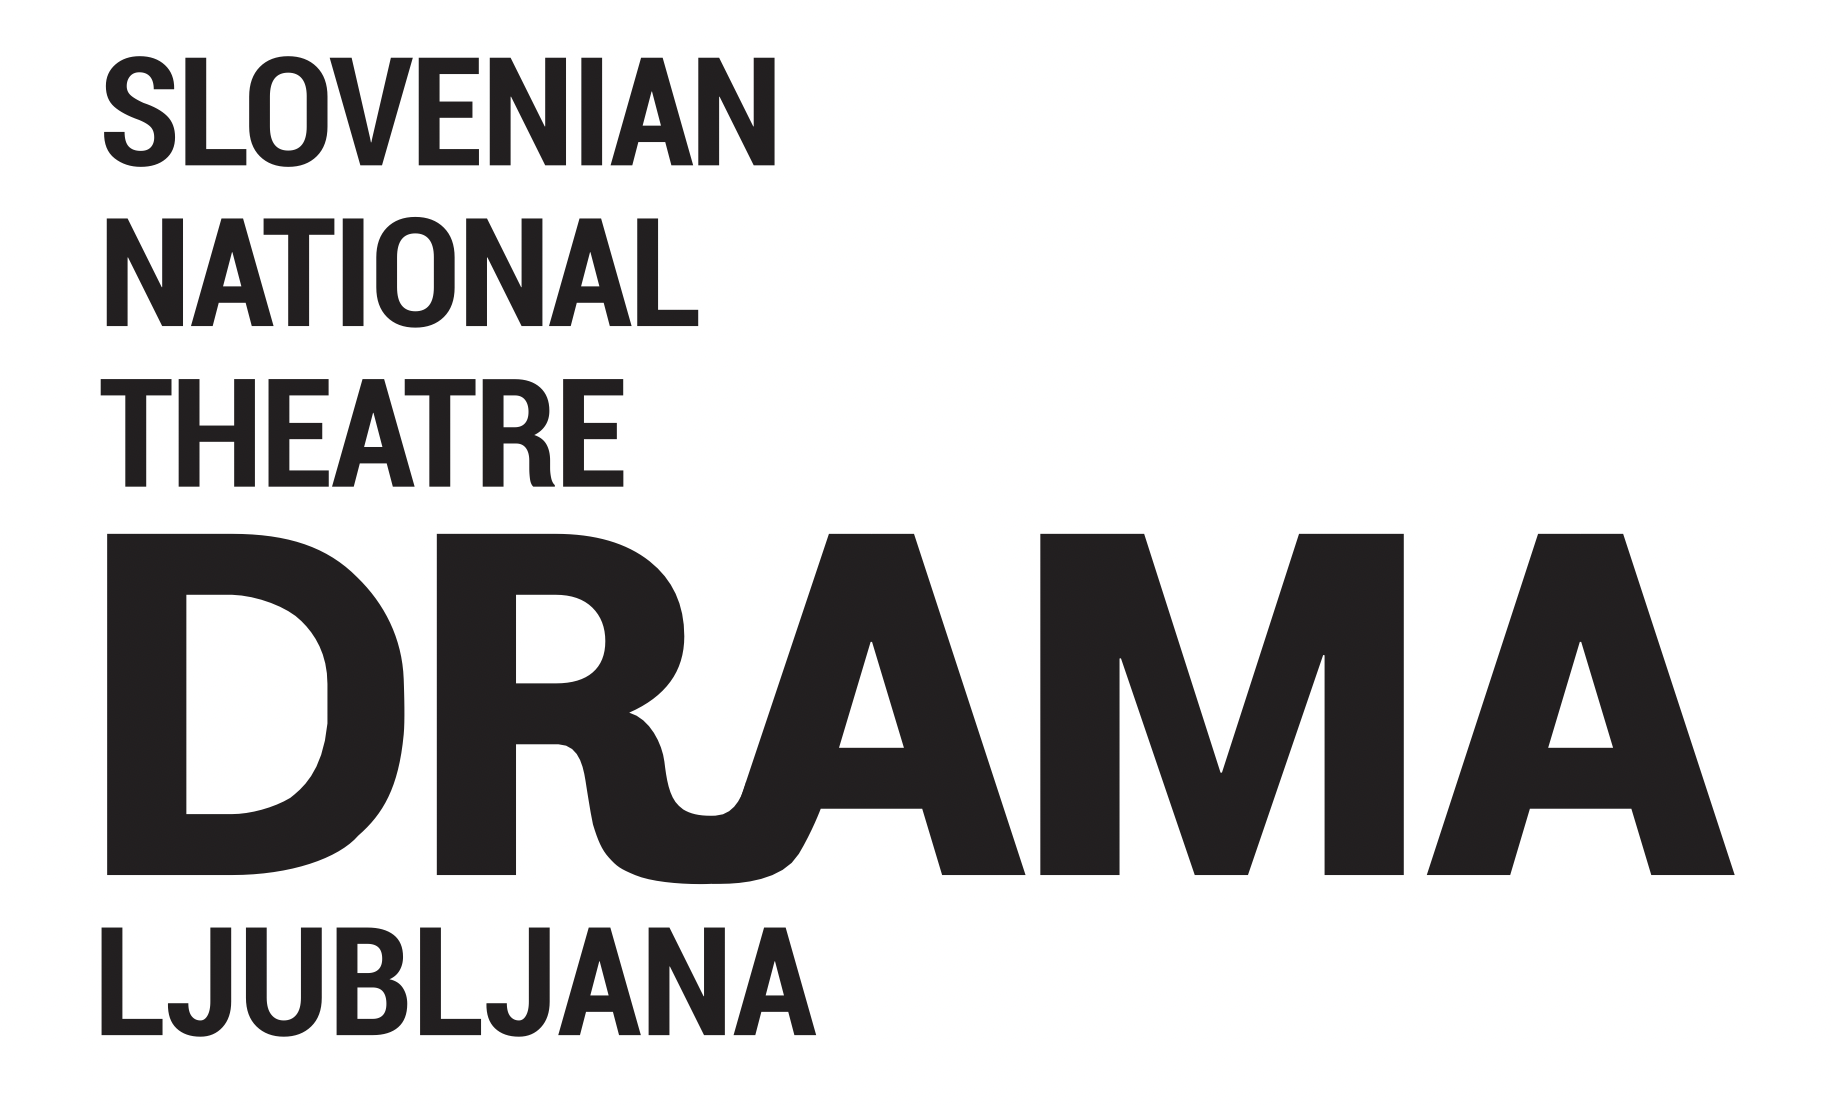 Slovenian National Theatre Drama